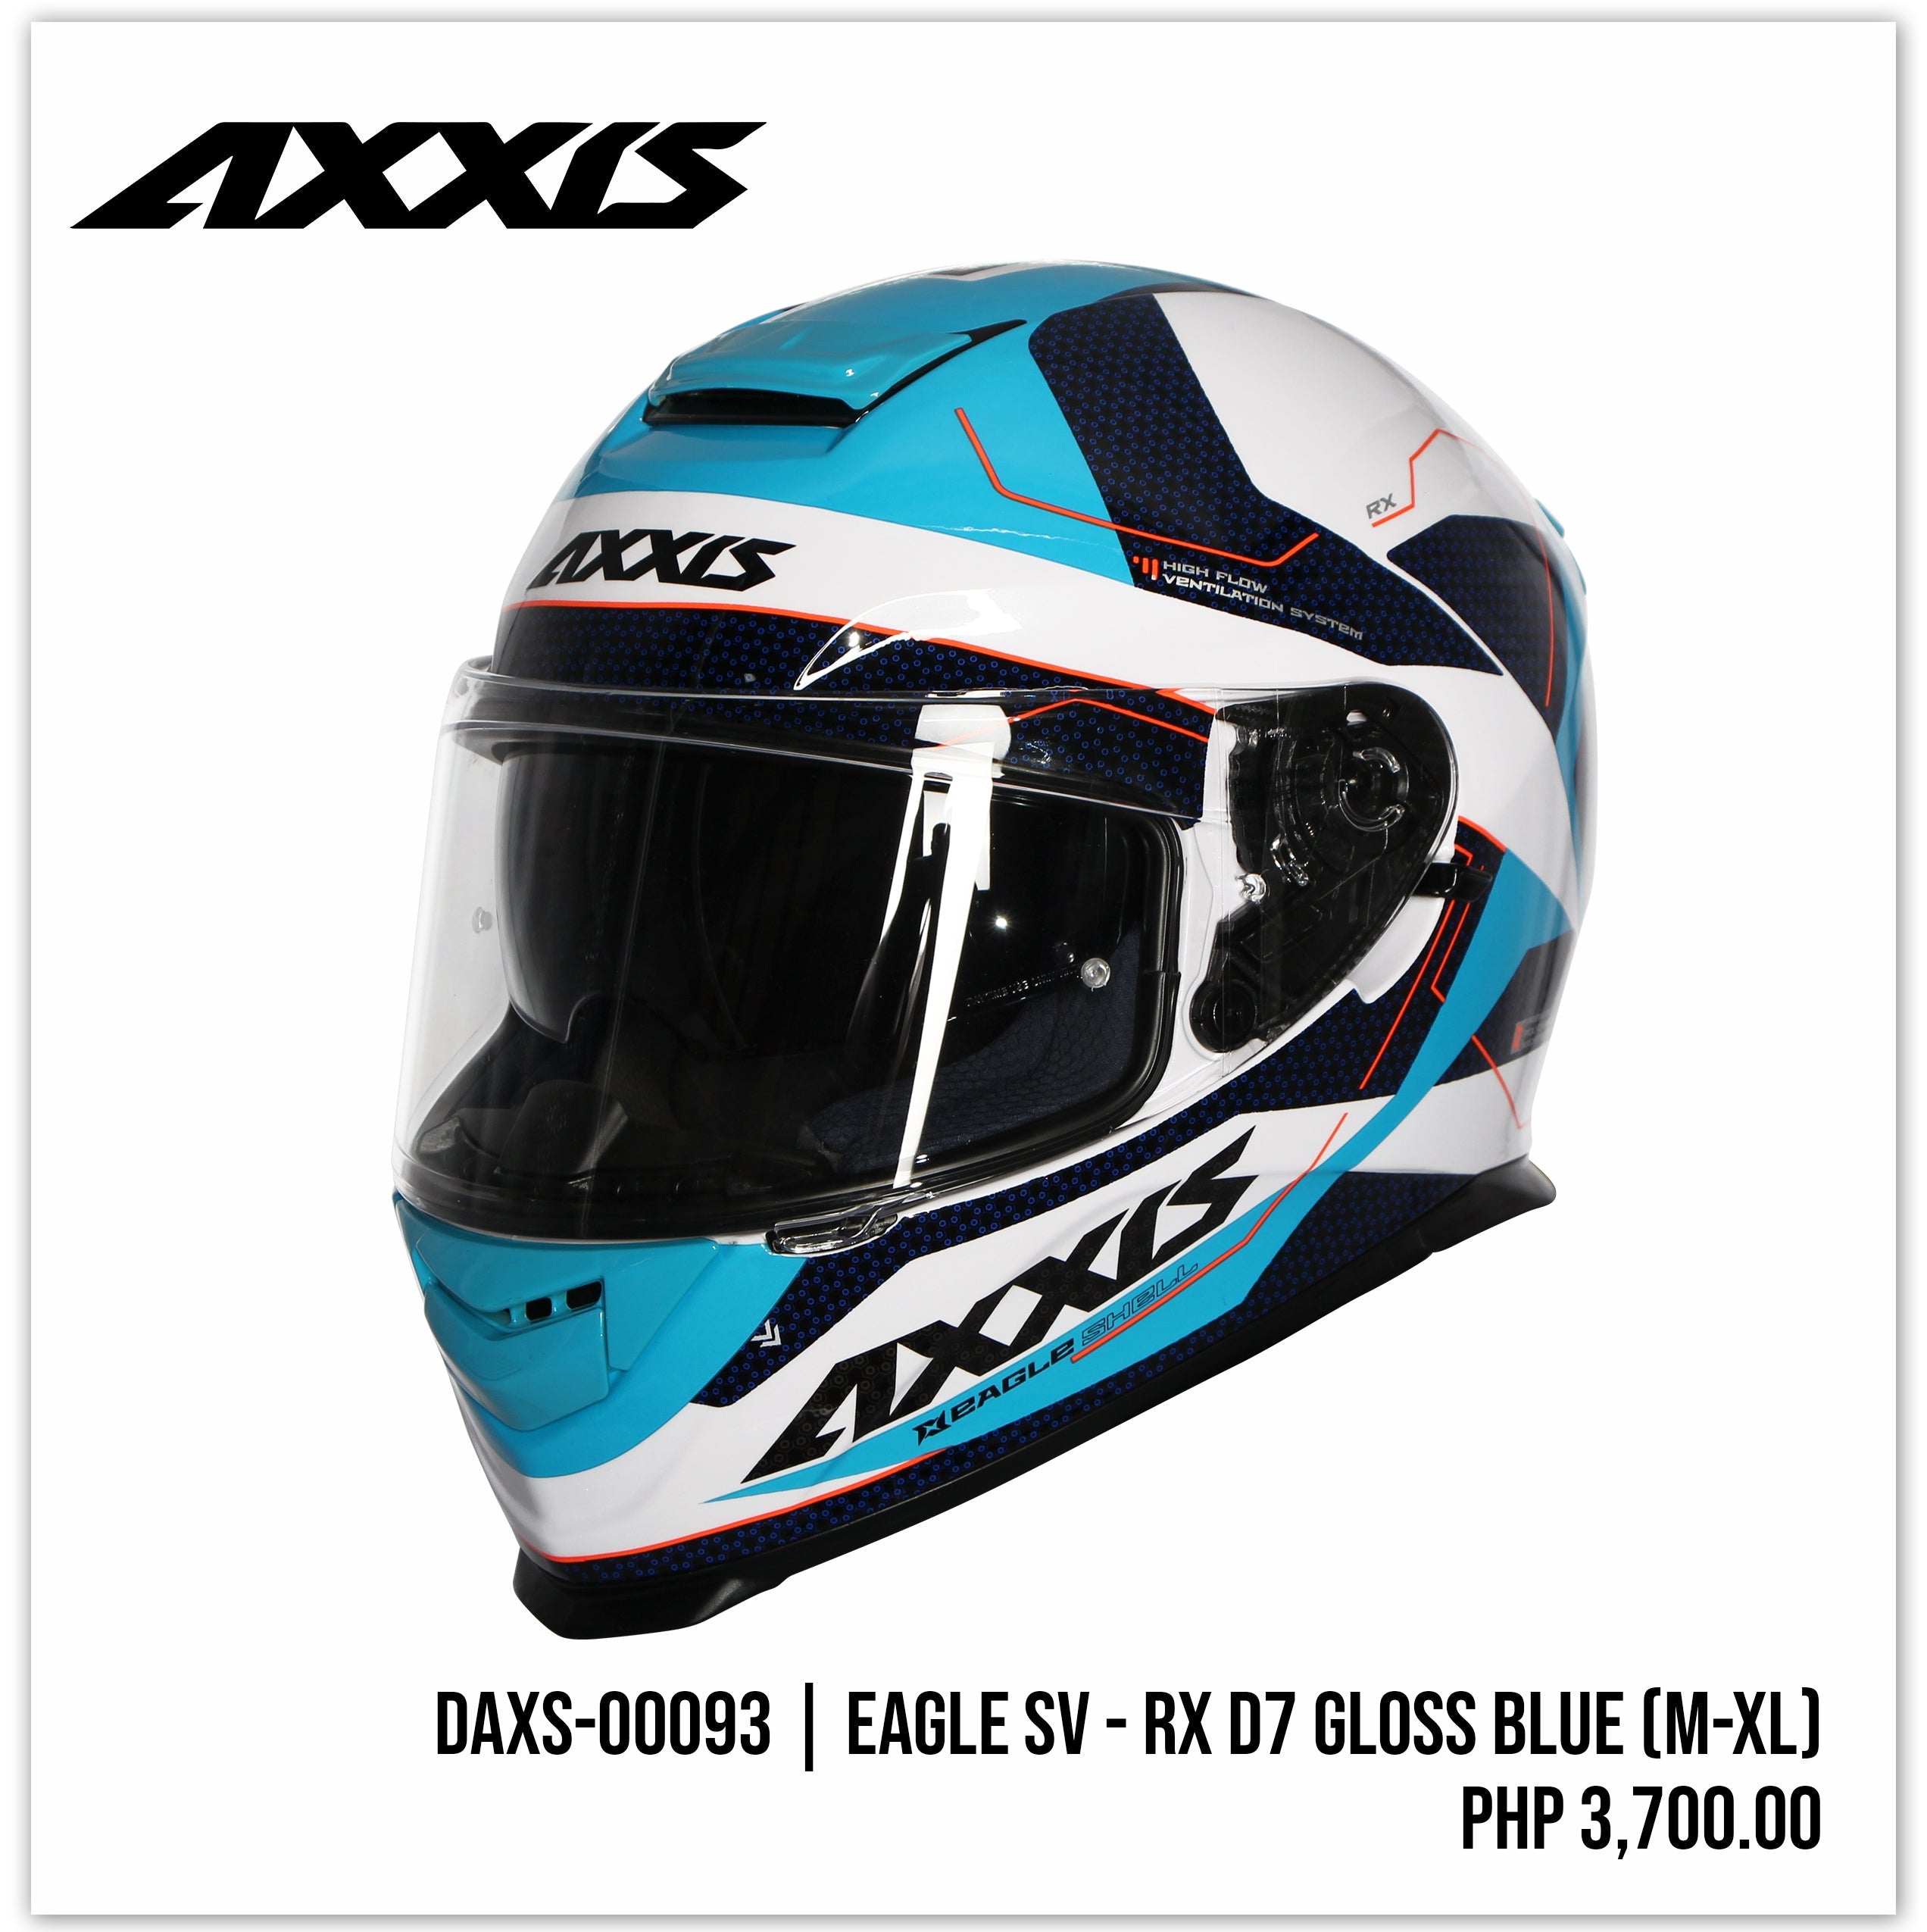 Eagle SV - RX D7 Gloss Blue